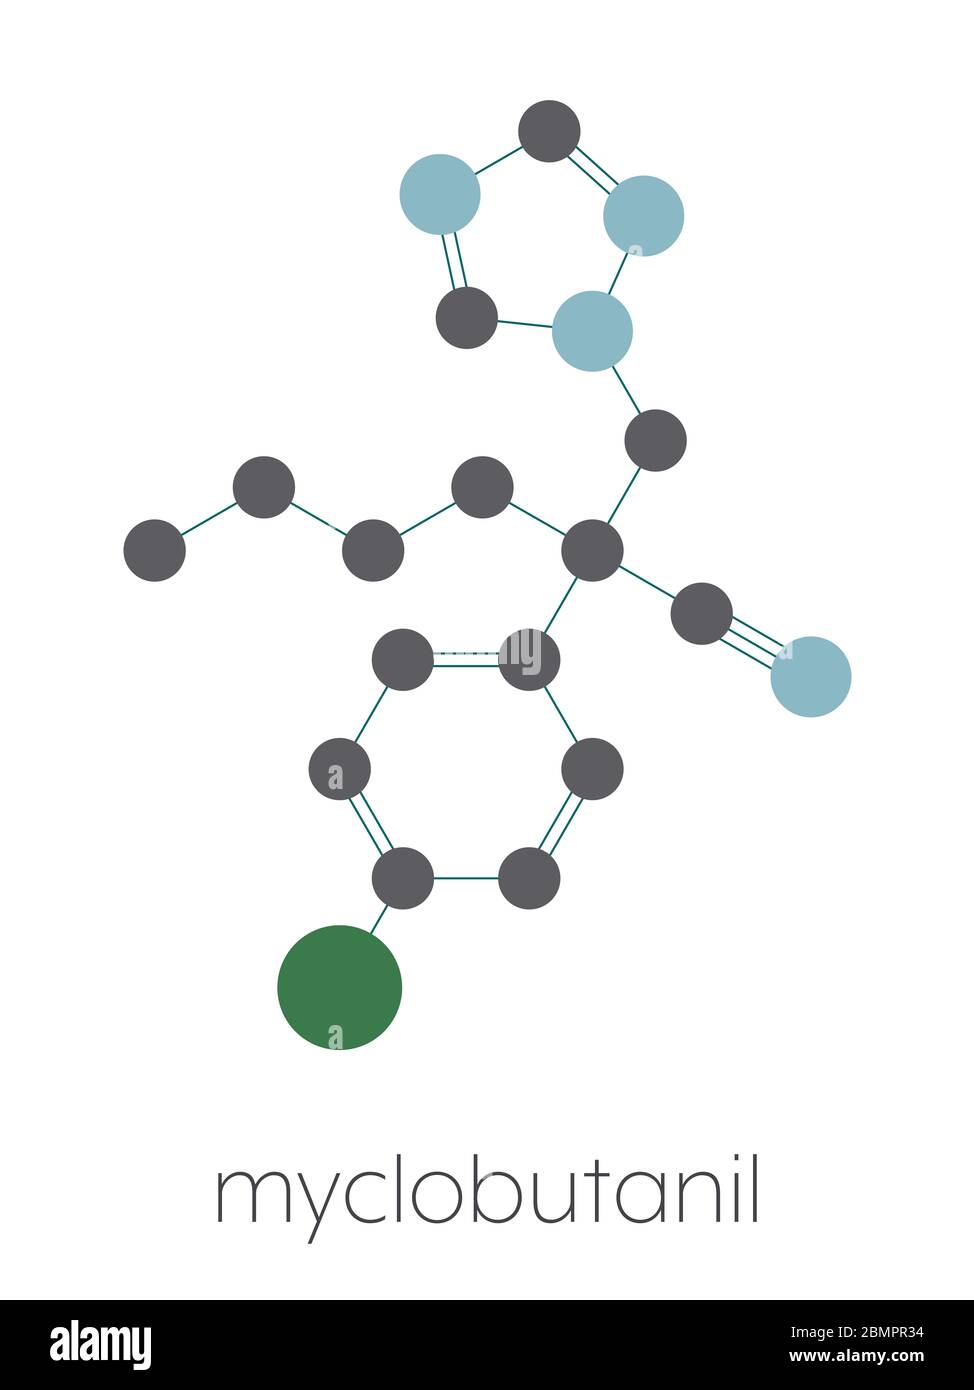 Myclobutanil antifungal molecule (triazole class). Stylized skeletal formula (chemical structure): Atoms are shown as color-coded circles: hydrogen (hidden), carbon (grey), nitrogen (blue), chlorine (green). Stock Photo